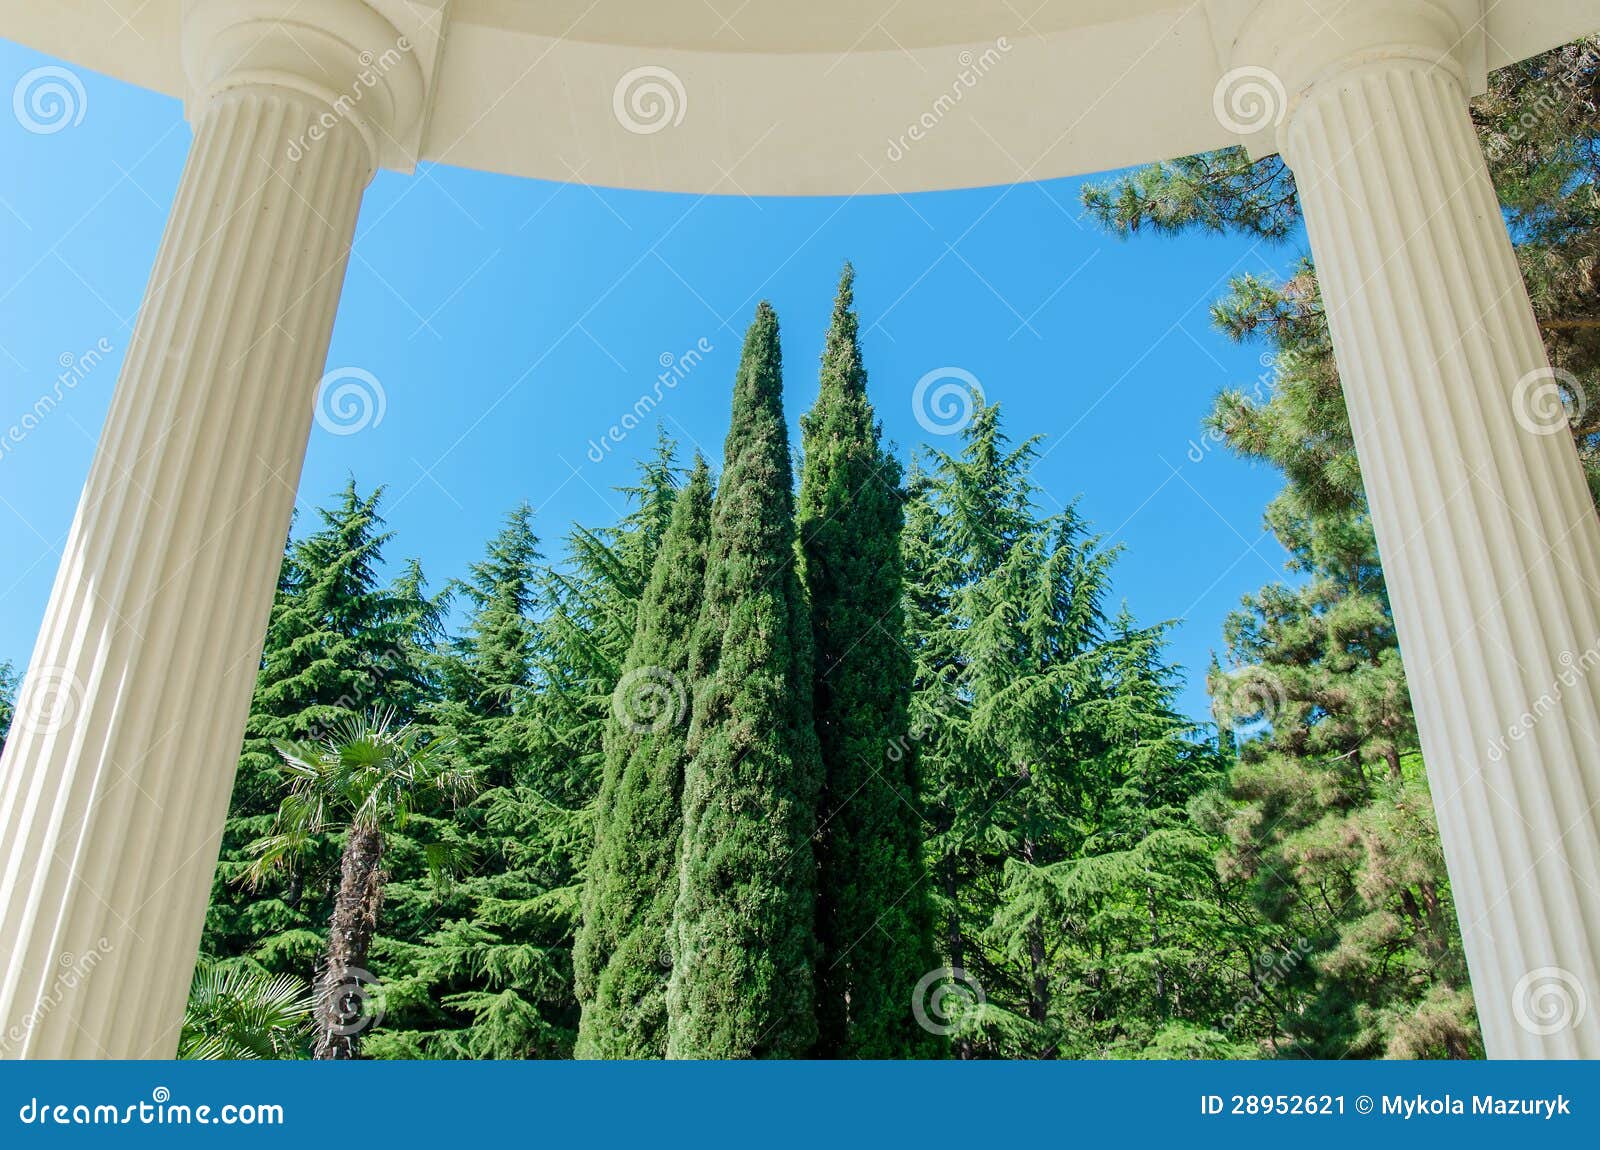 column and tree